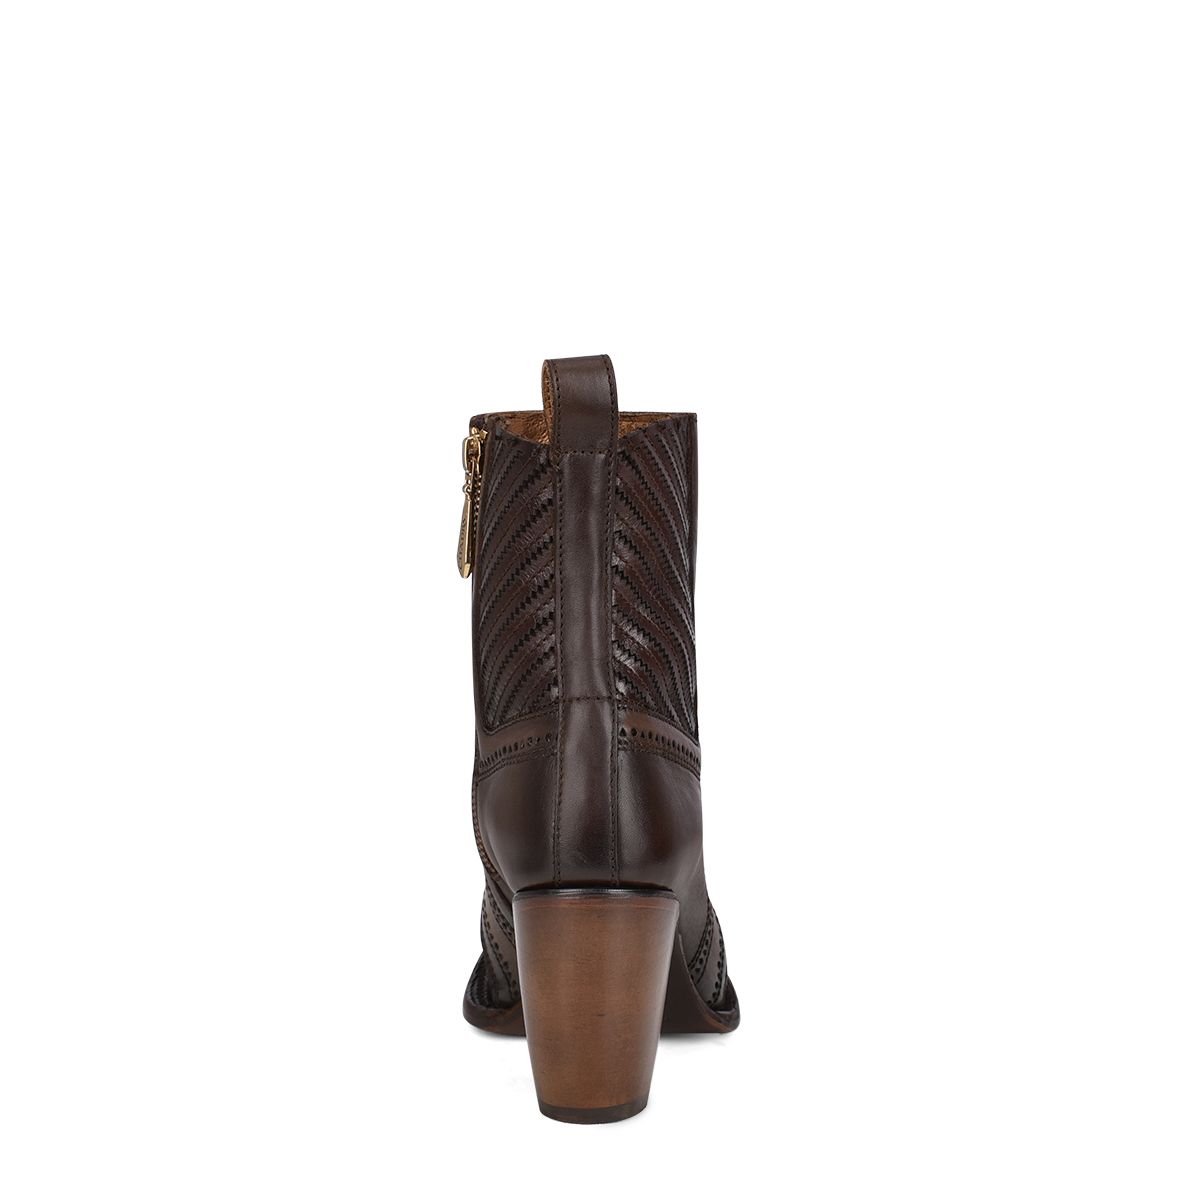 3F94MA - Cuadra brown fashion Paris Texas stingray ankle boots for women-CUADRA-Kuet-Cuadra-Boots